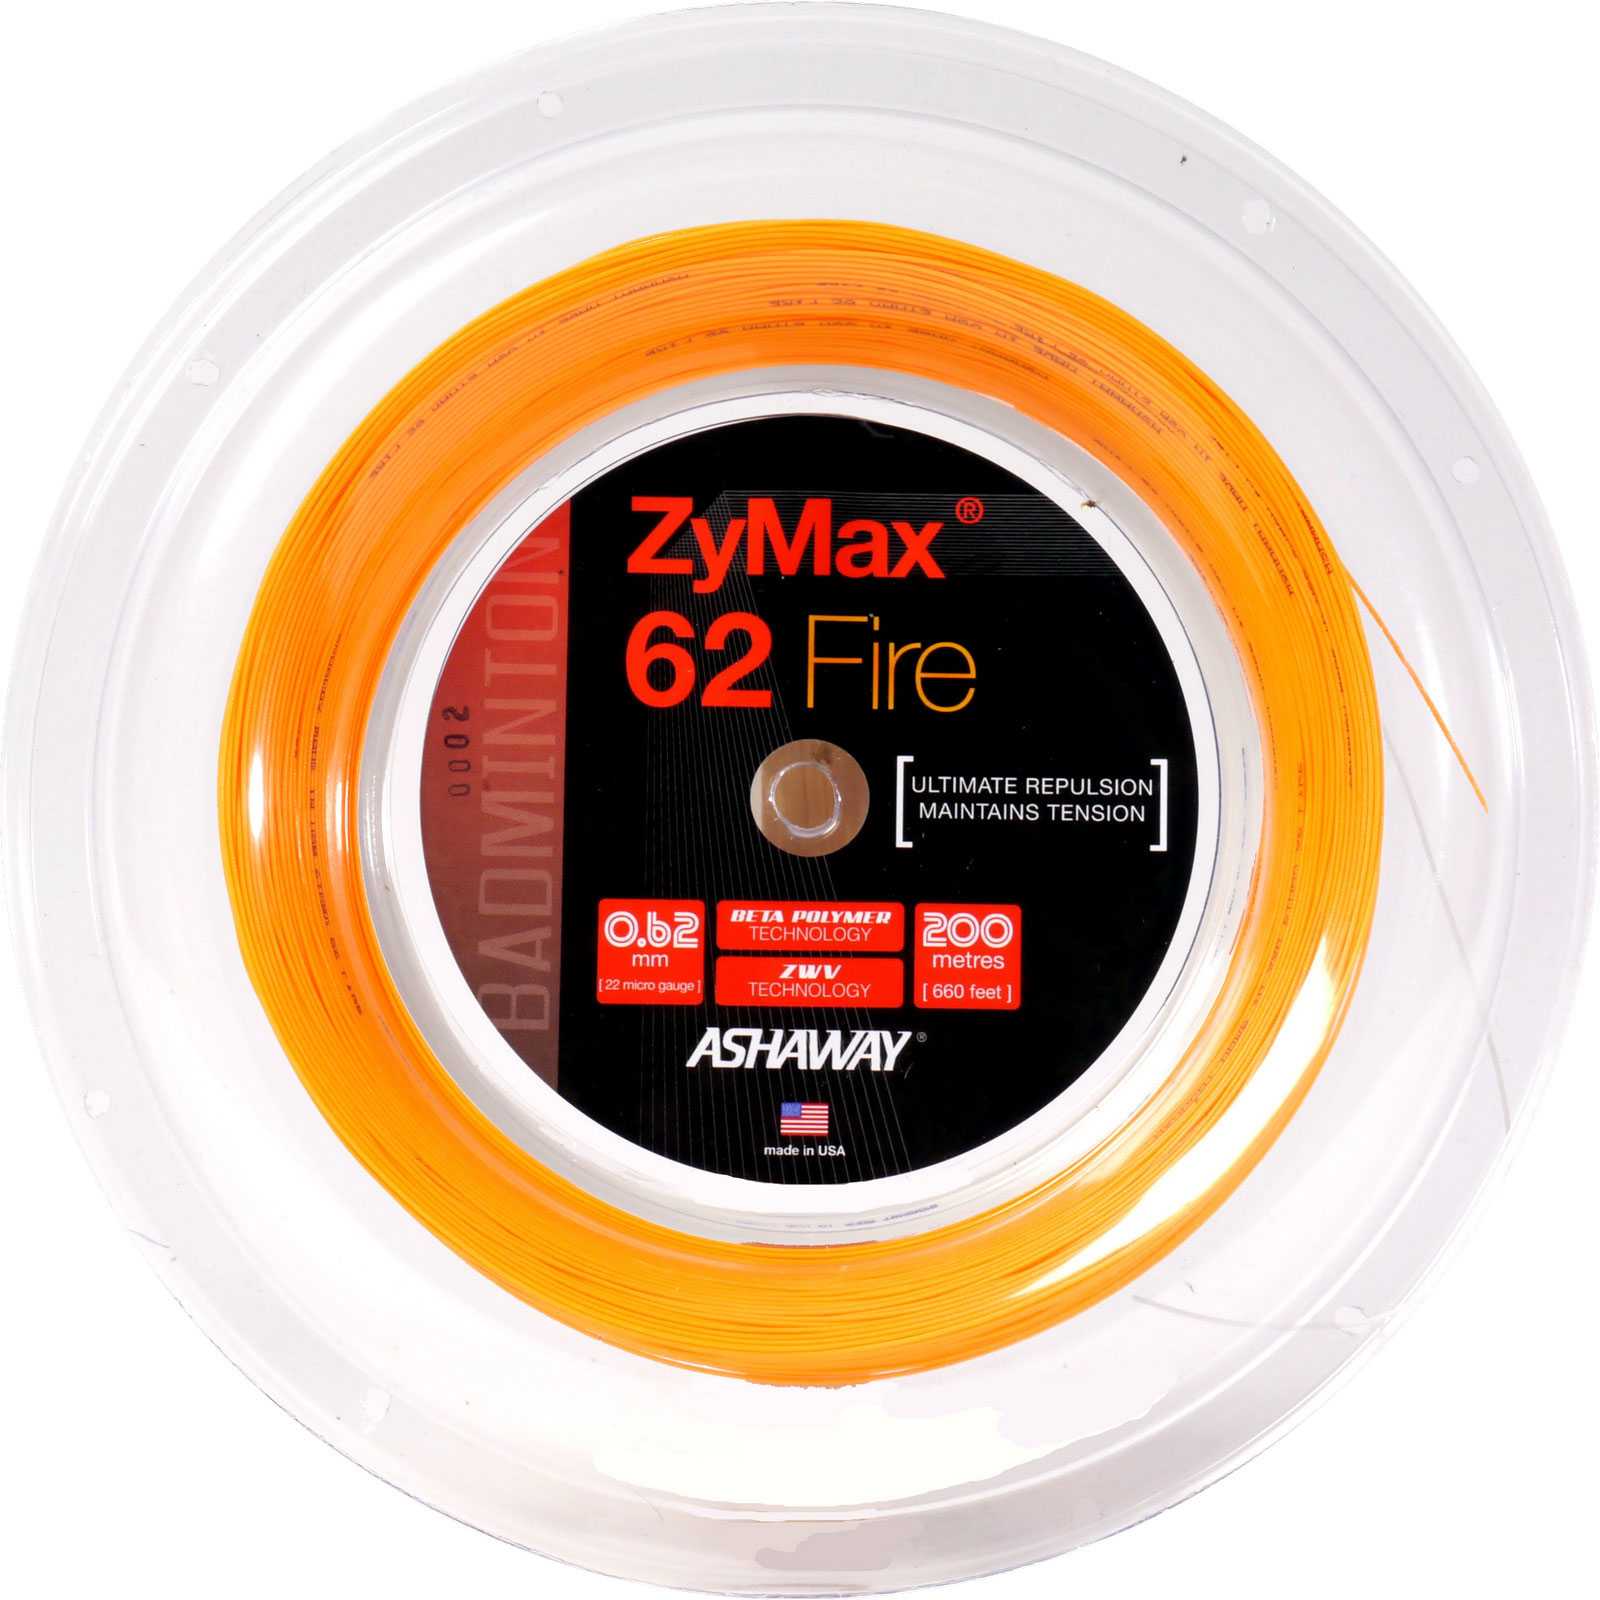 ASHAWAY Zymax 62 Fire - Orange - 200m